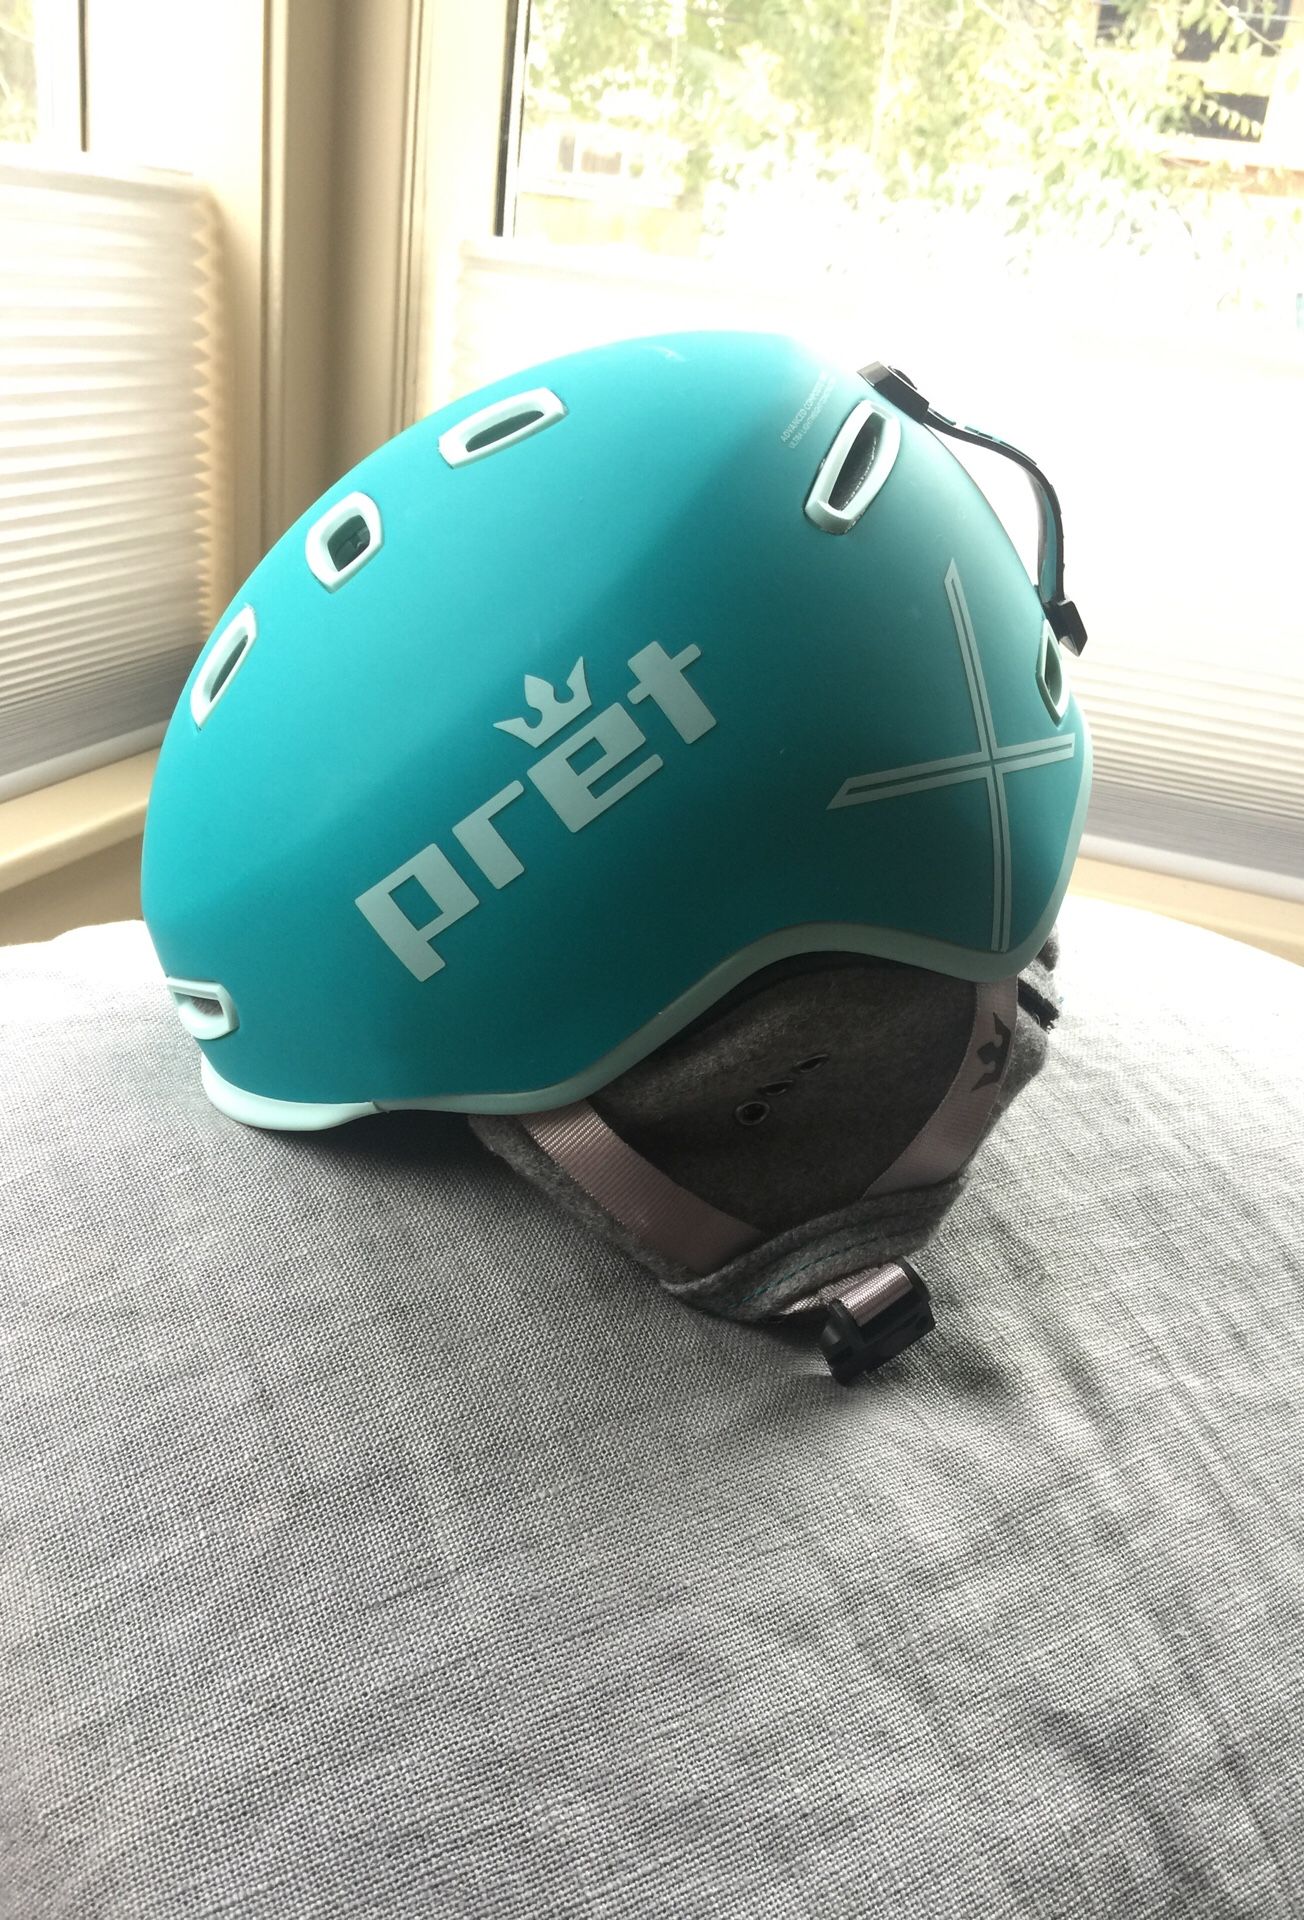 W’s Pret Lyric X Helmet size Small